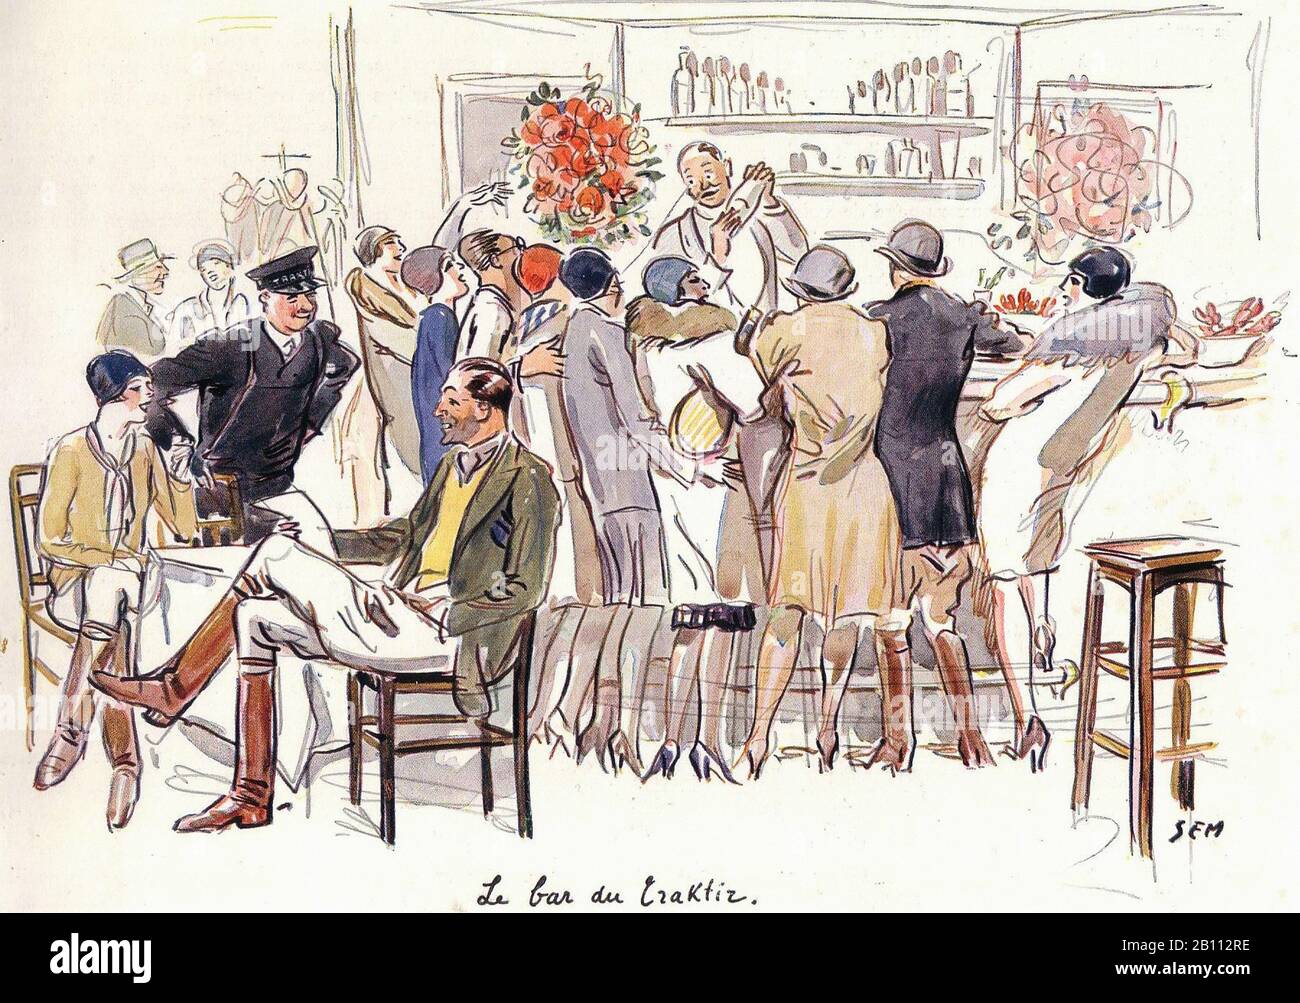 Le bar du Craktiz - Ilustración de SEM (Georges Goursat 1863–1934) Foto de stock